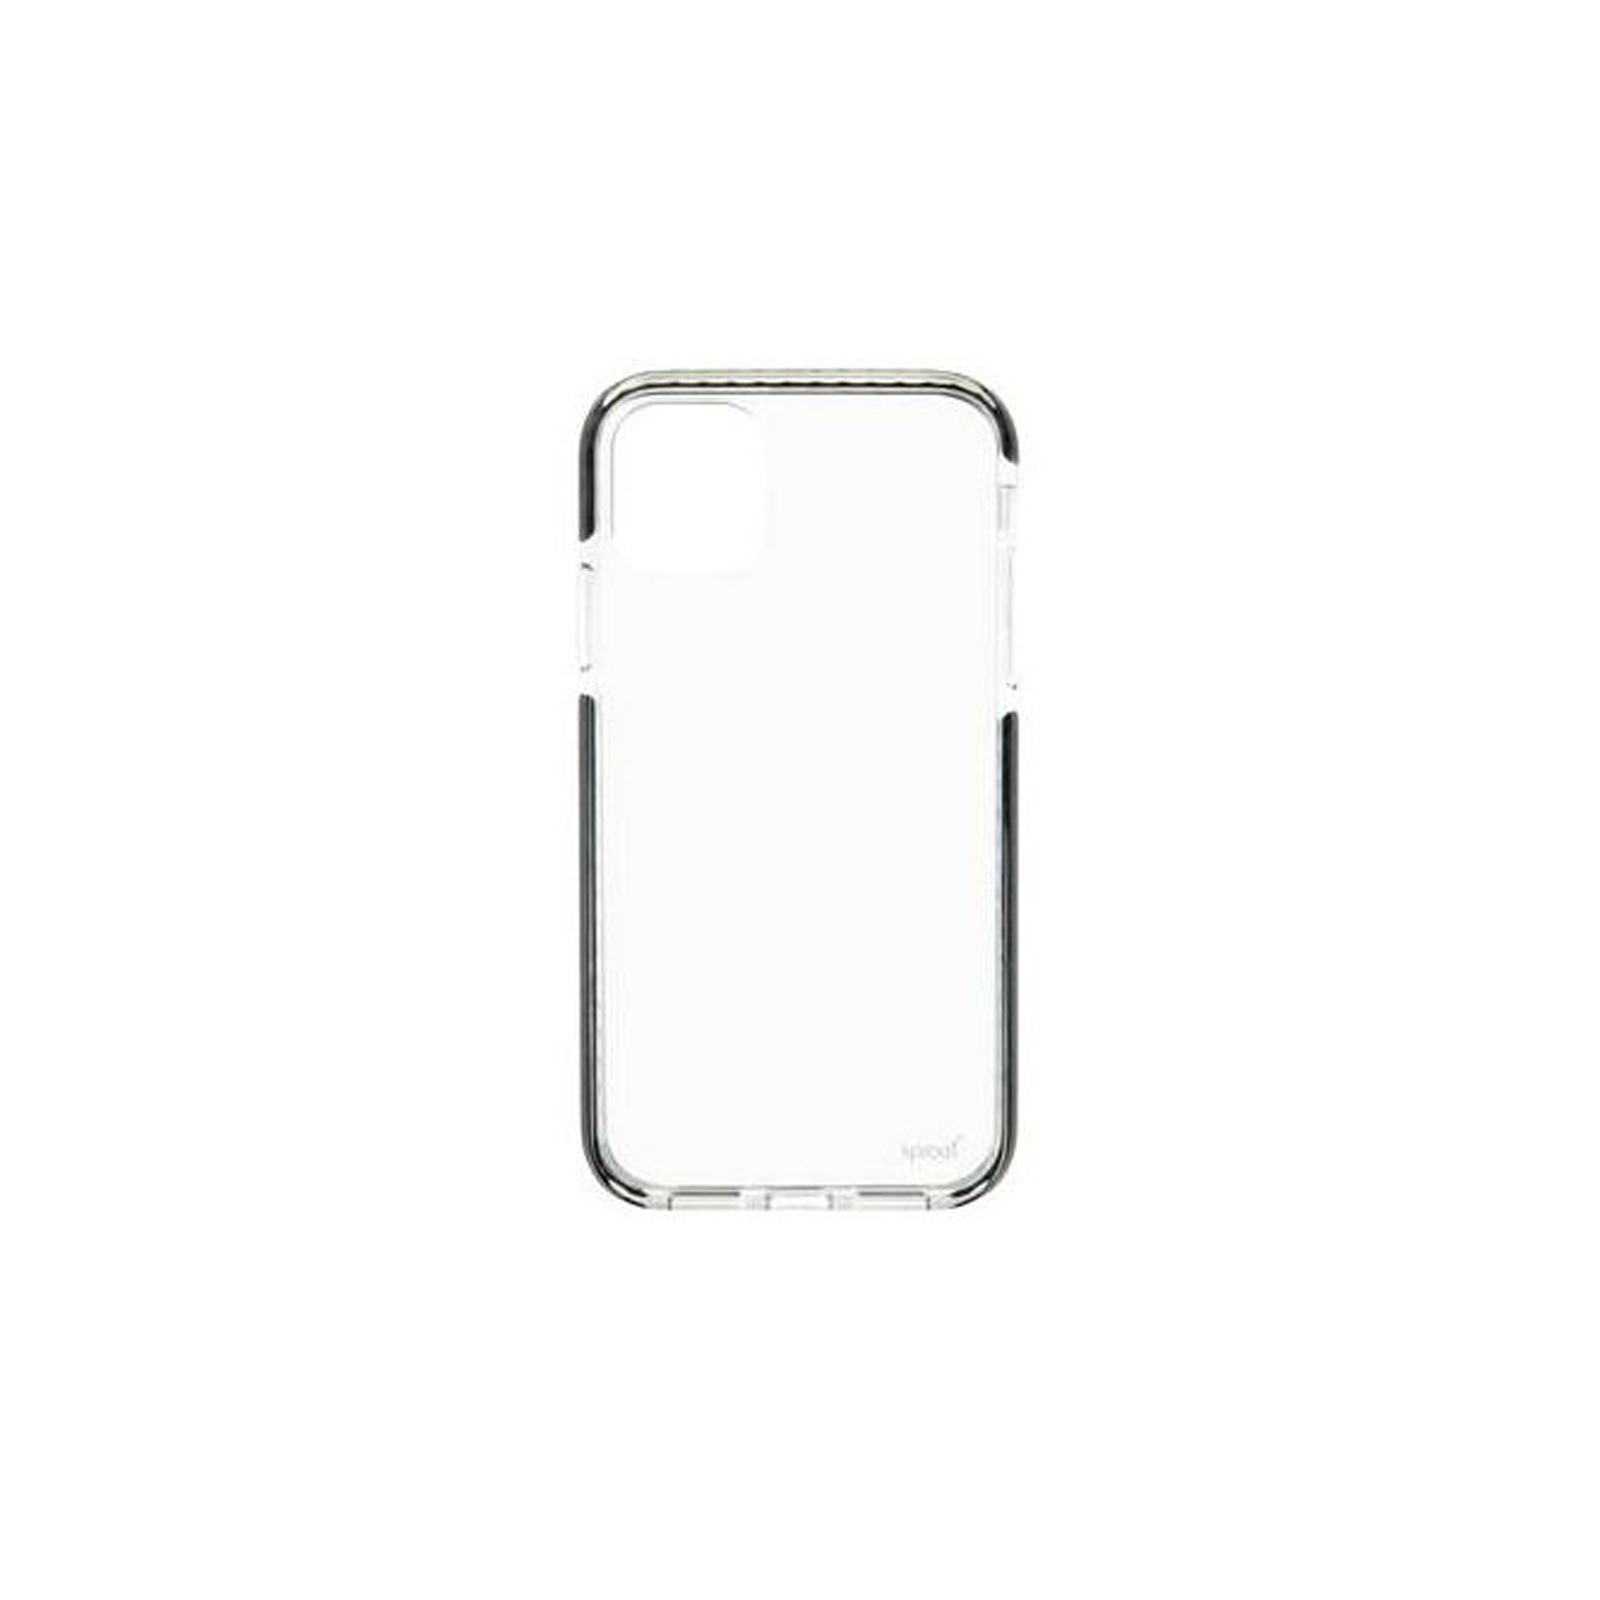 DHC Case iPhone 12 Mini Black - Brand New